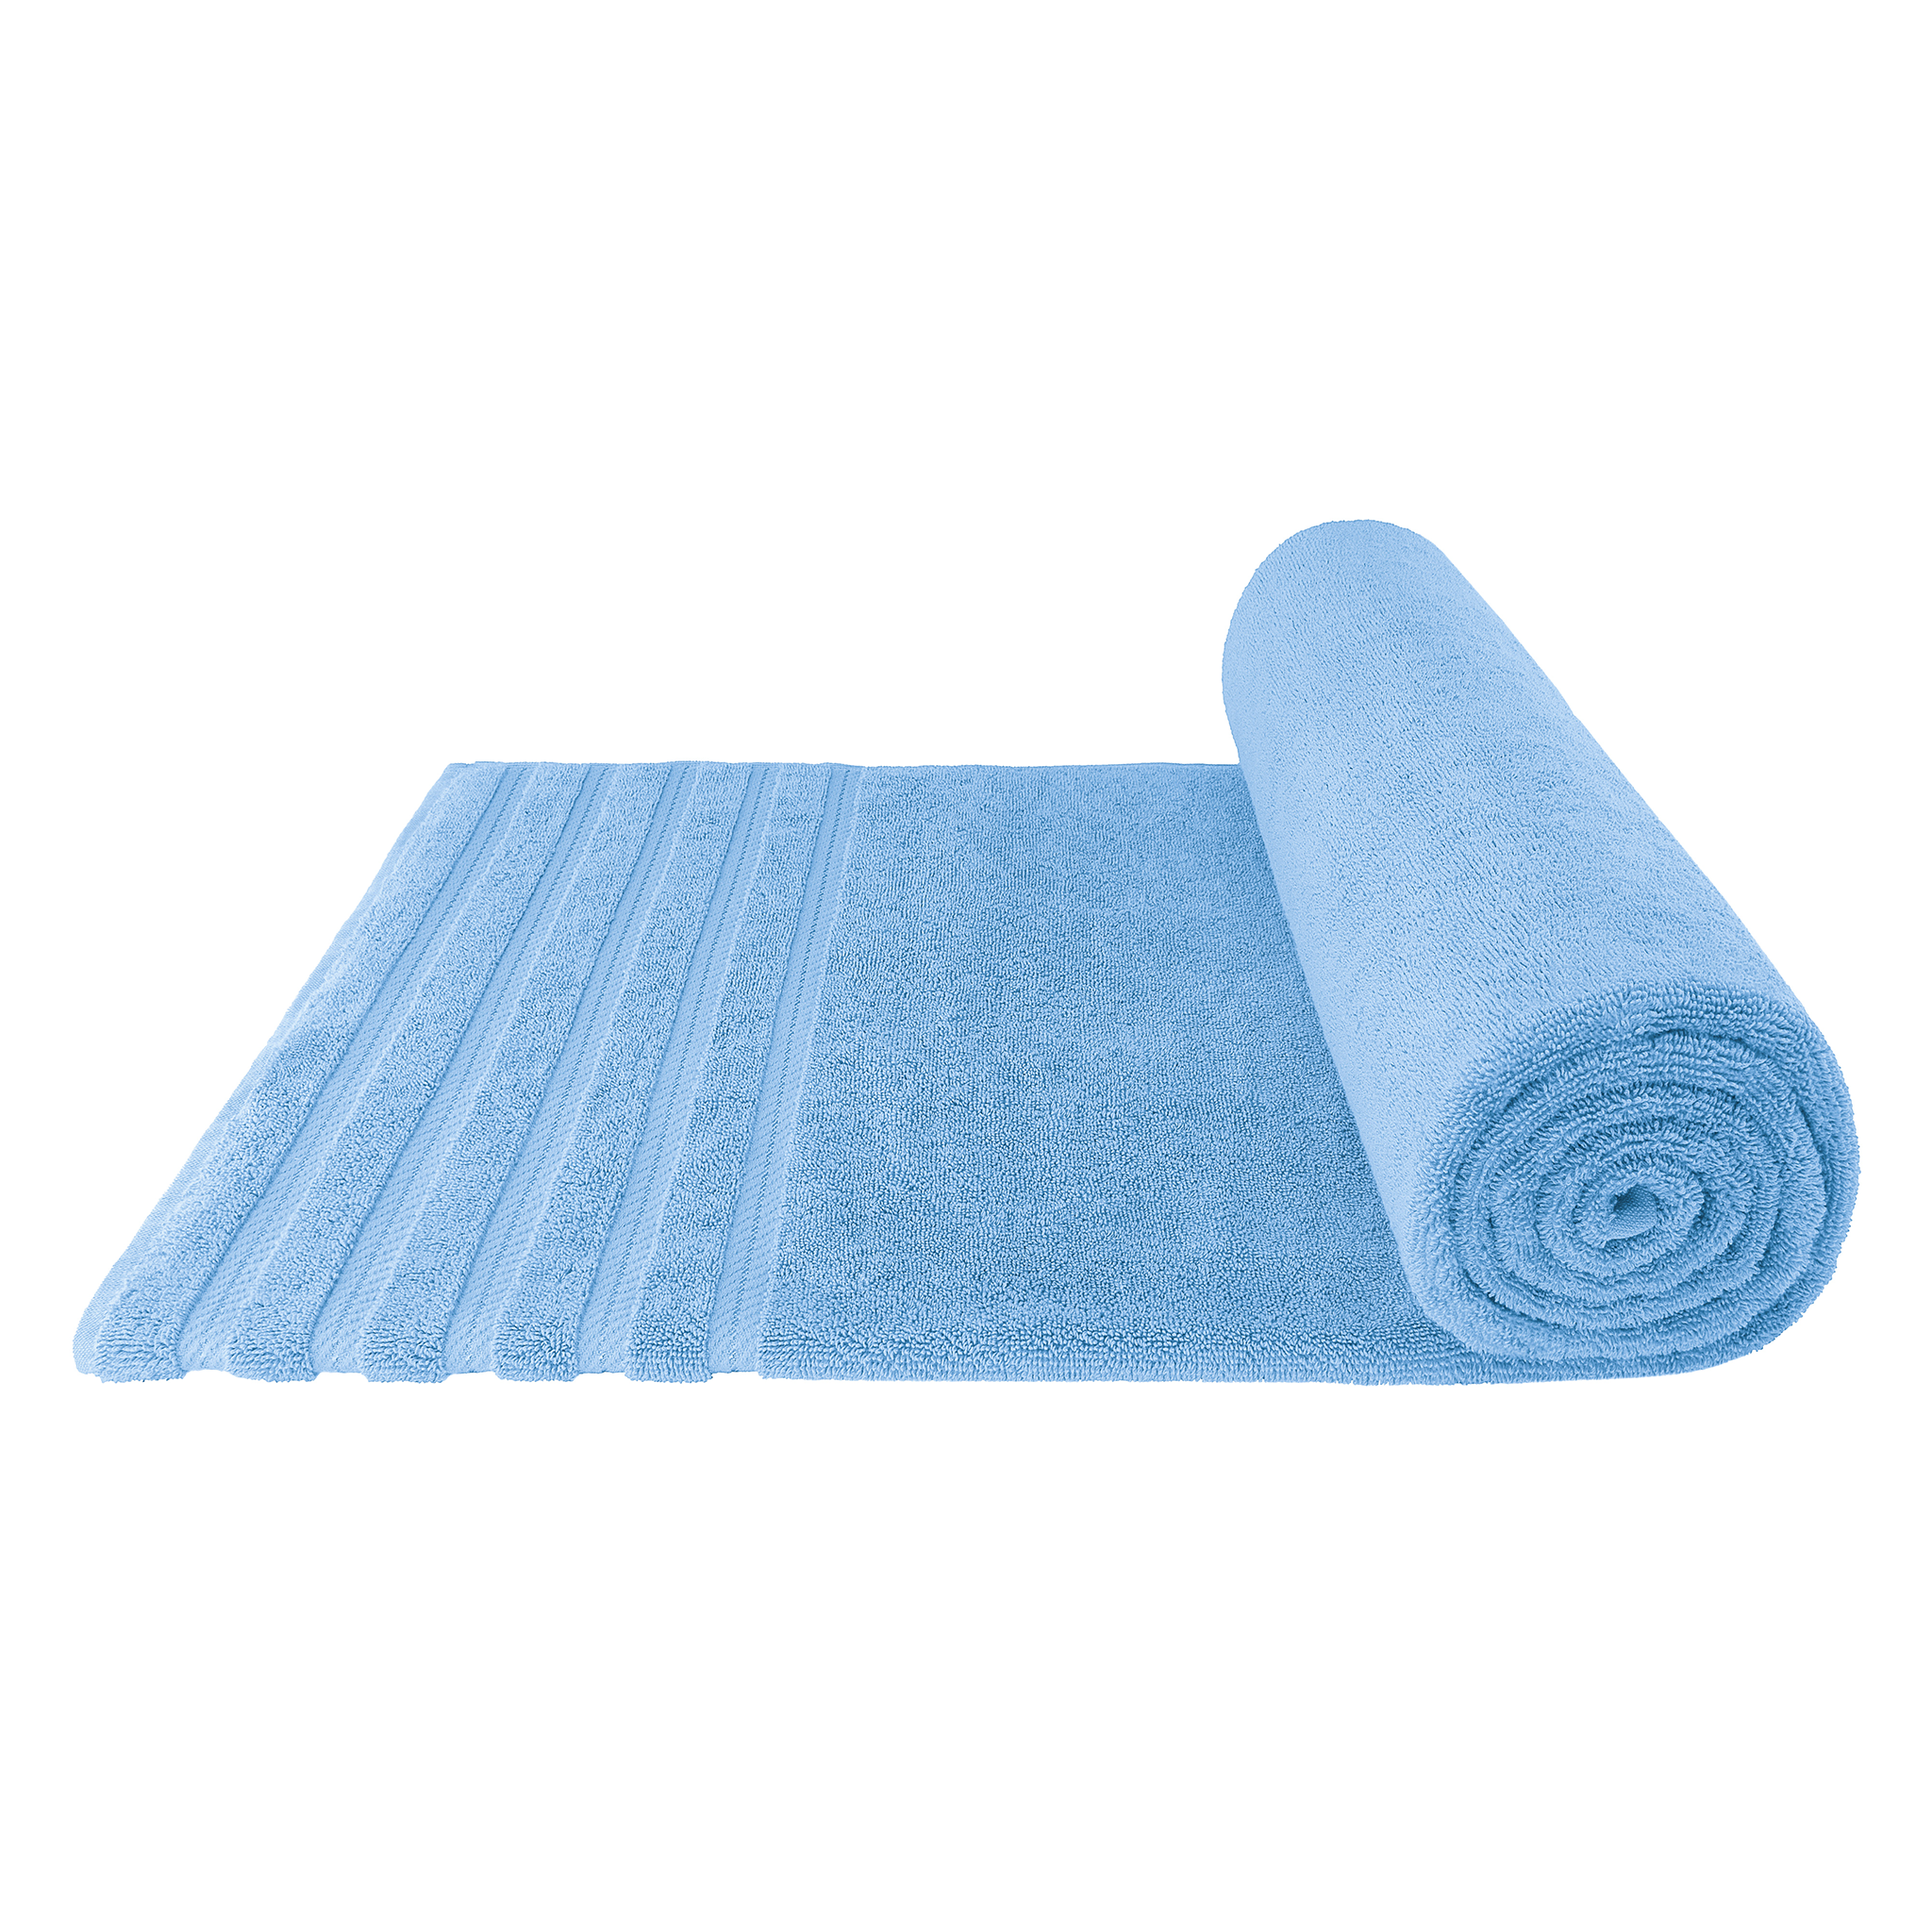 American Soft Linen - 35x70 Jumbo Bath Sheet Turkish Bath Towel - 16 Piece Case Pack - Sky-Blue - 6